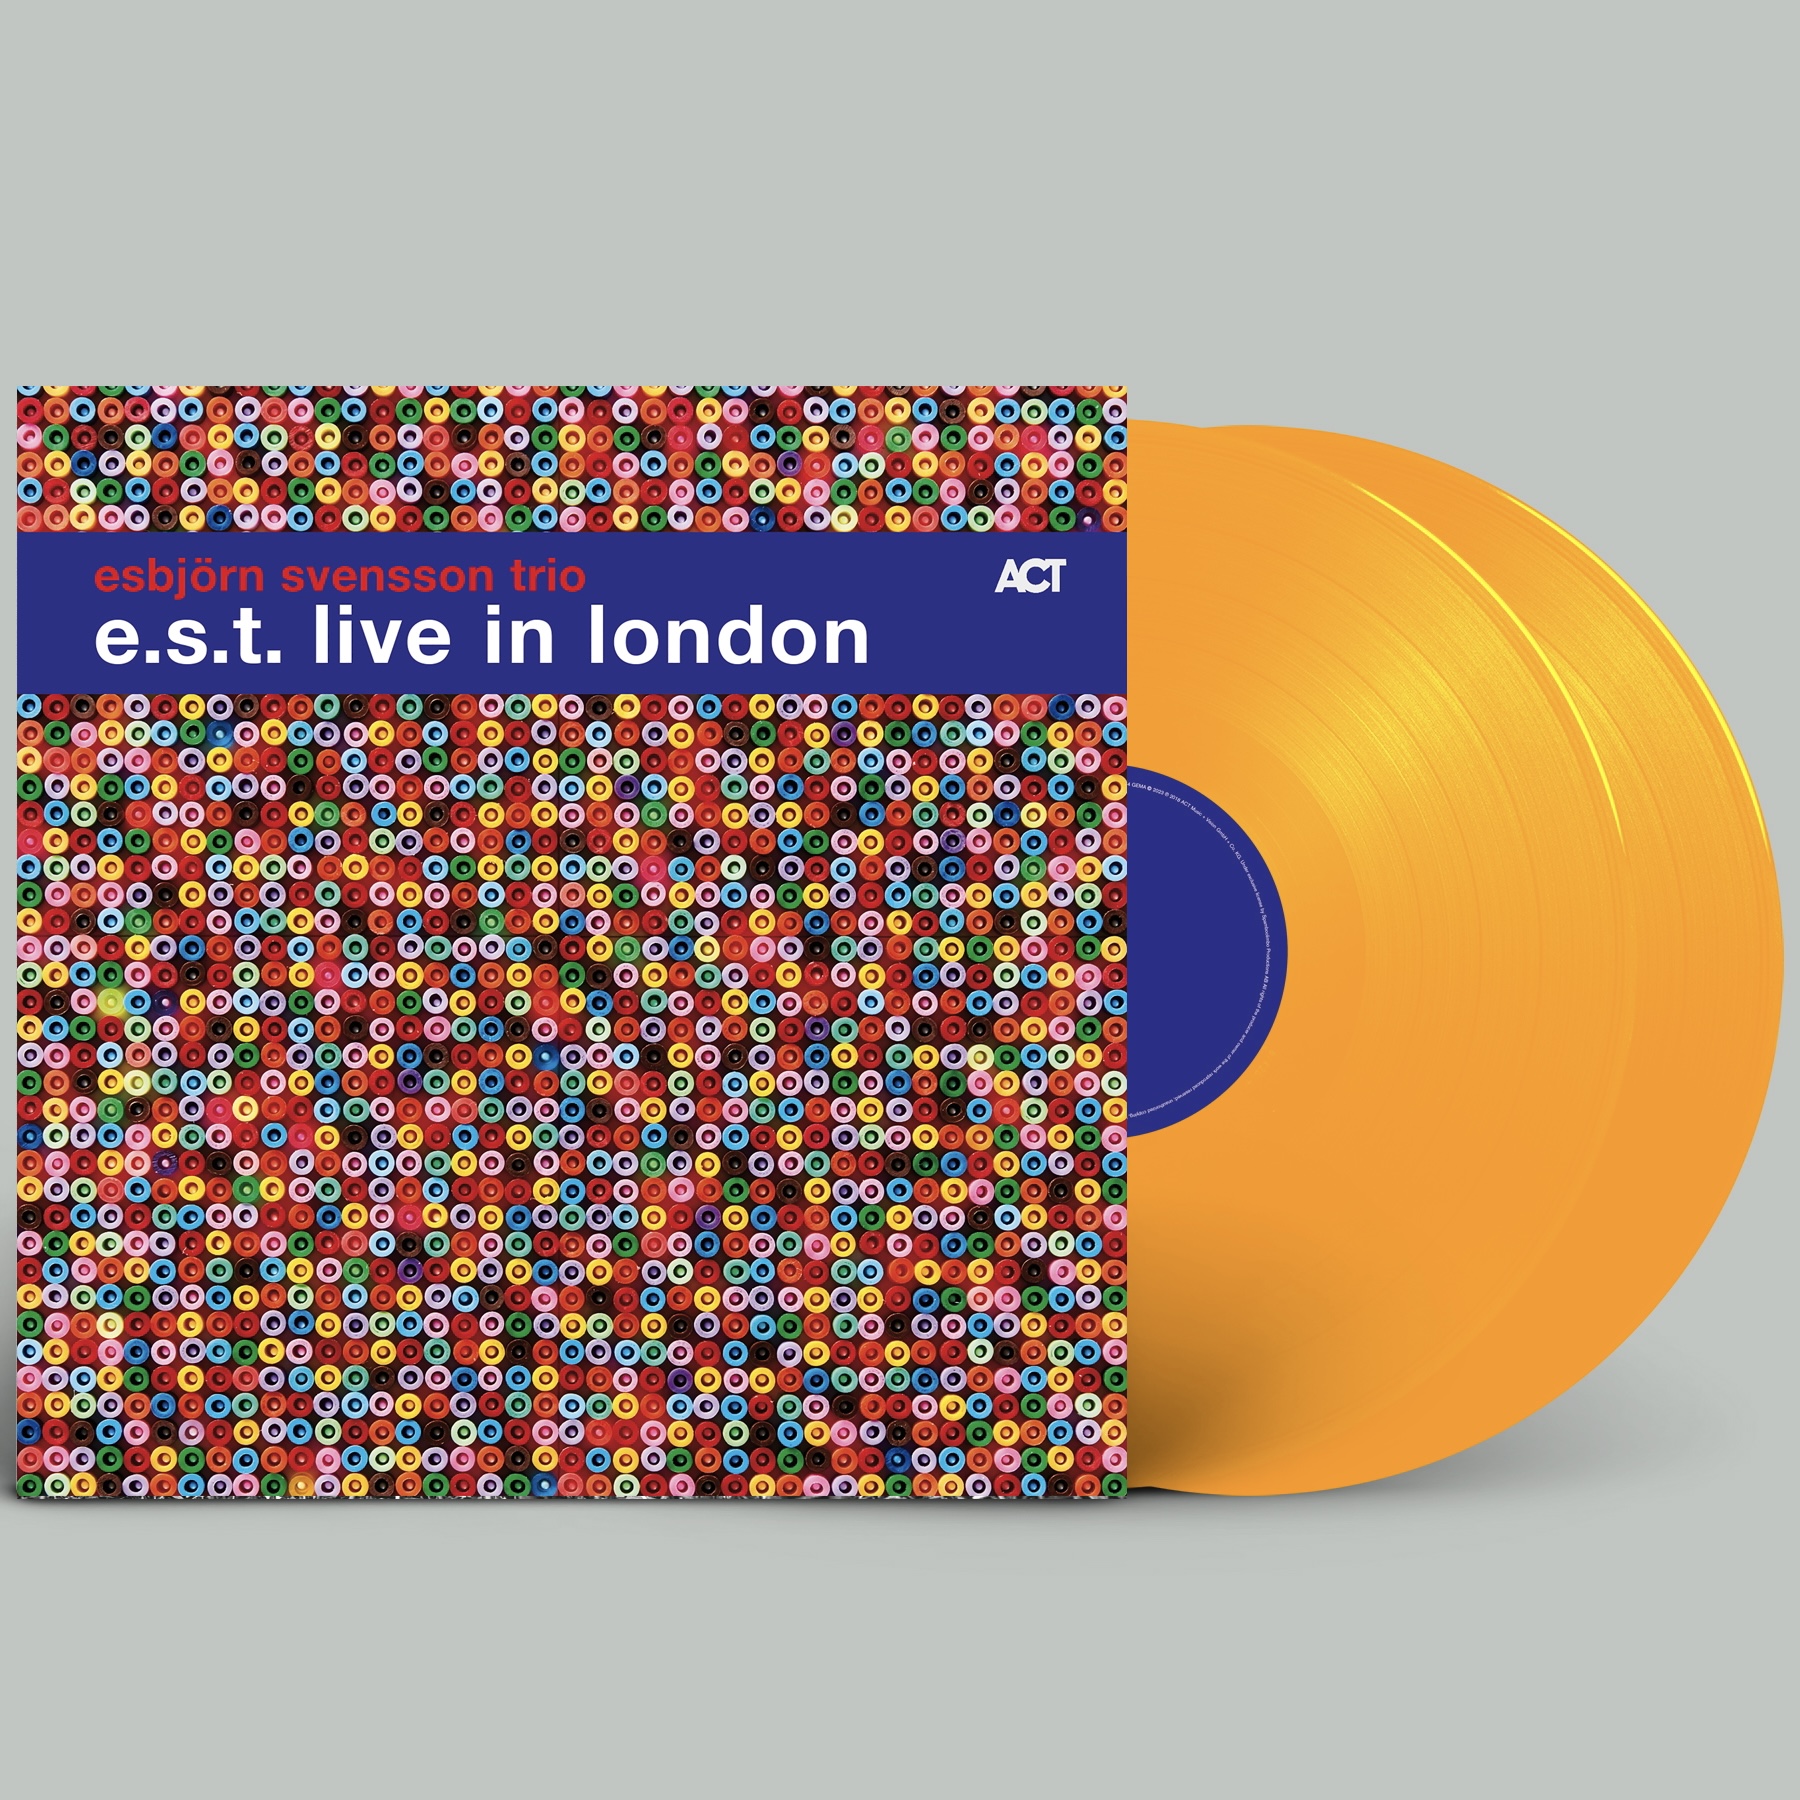 e.s.t. live in London